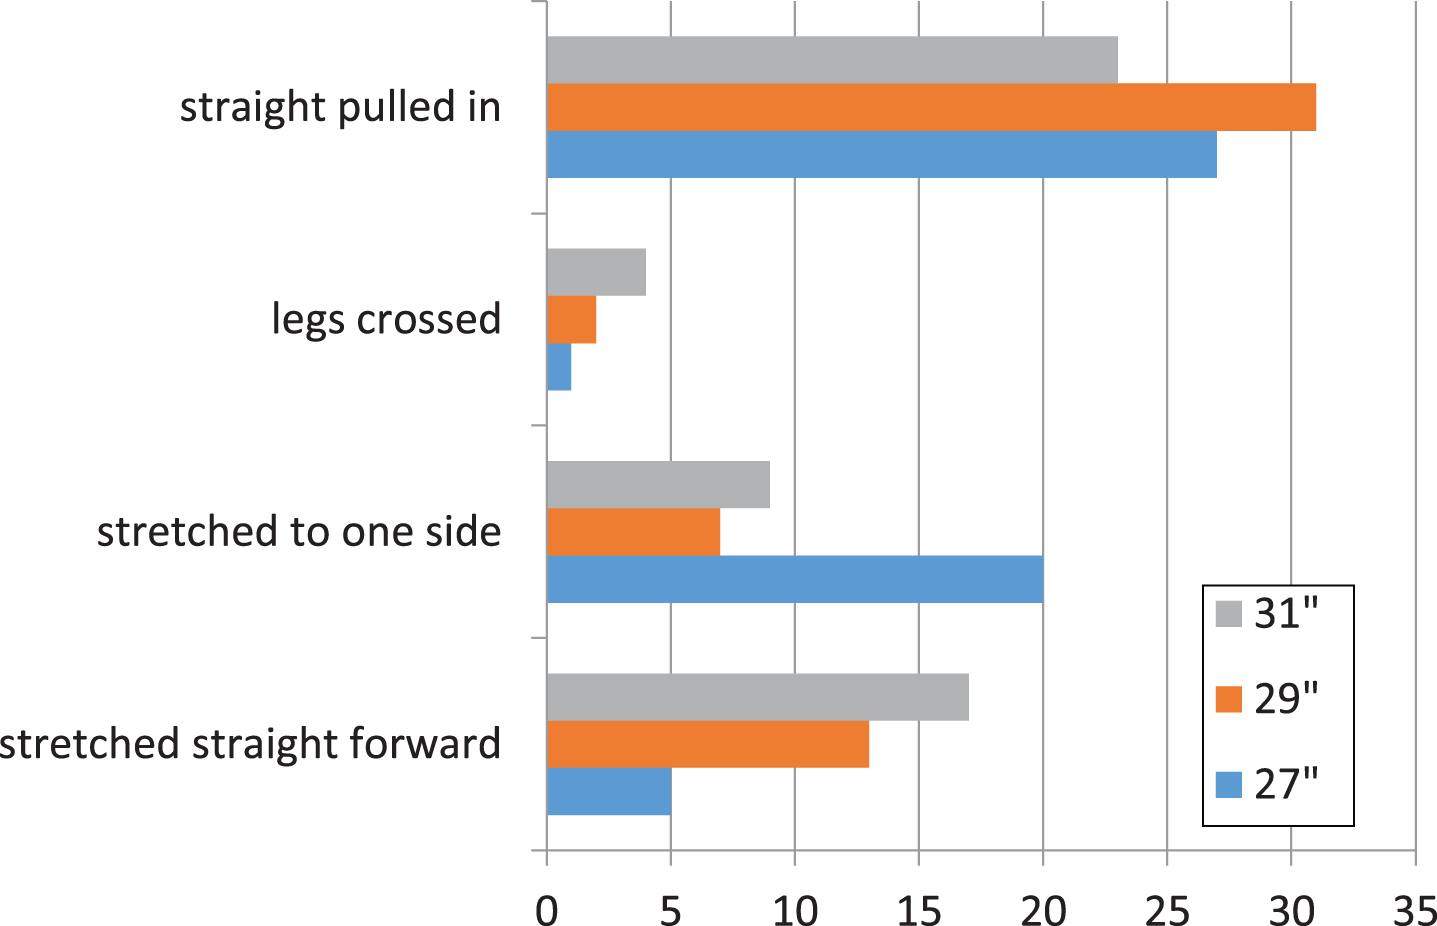 Frequency of participants observed per leg posture per setup.